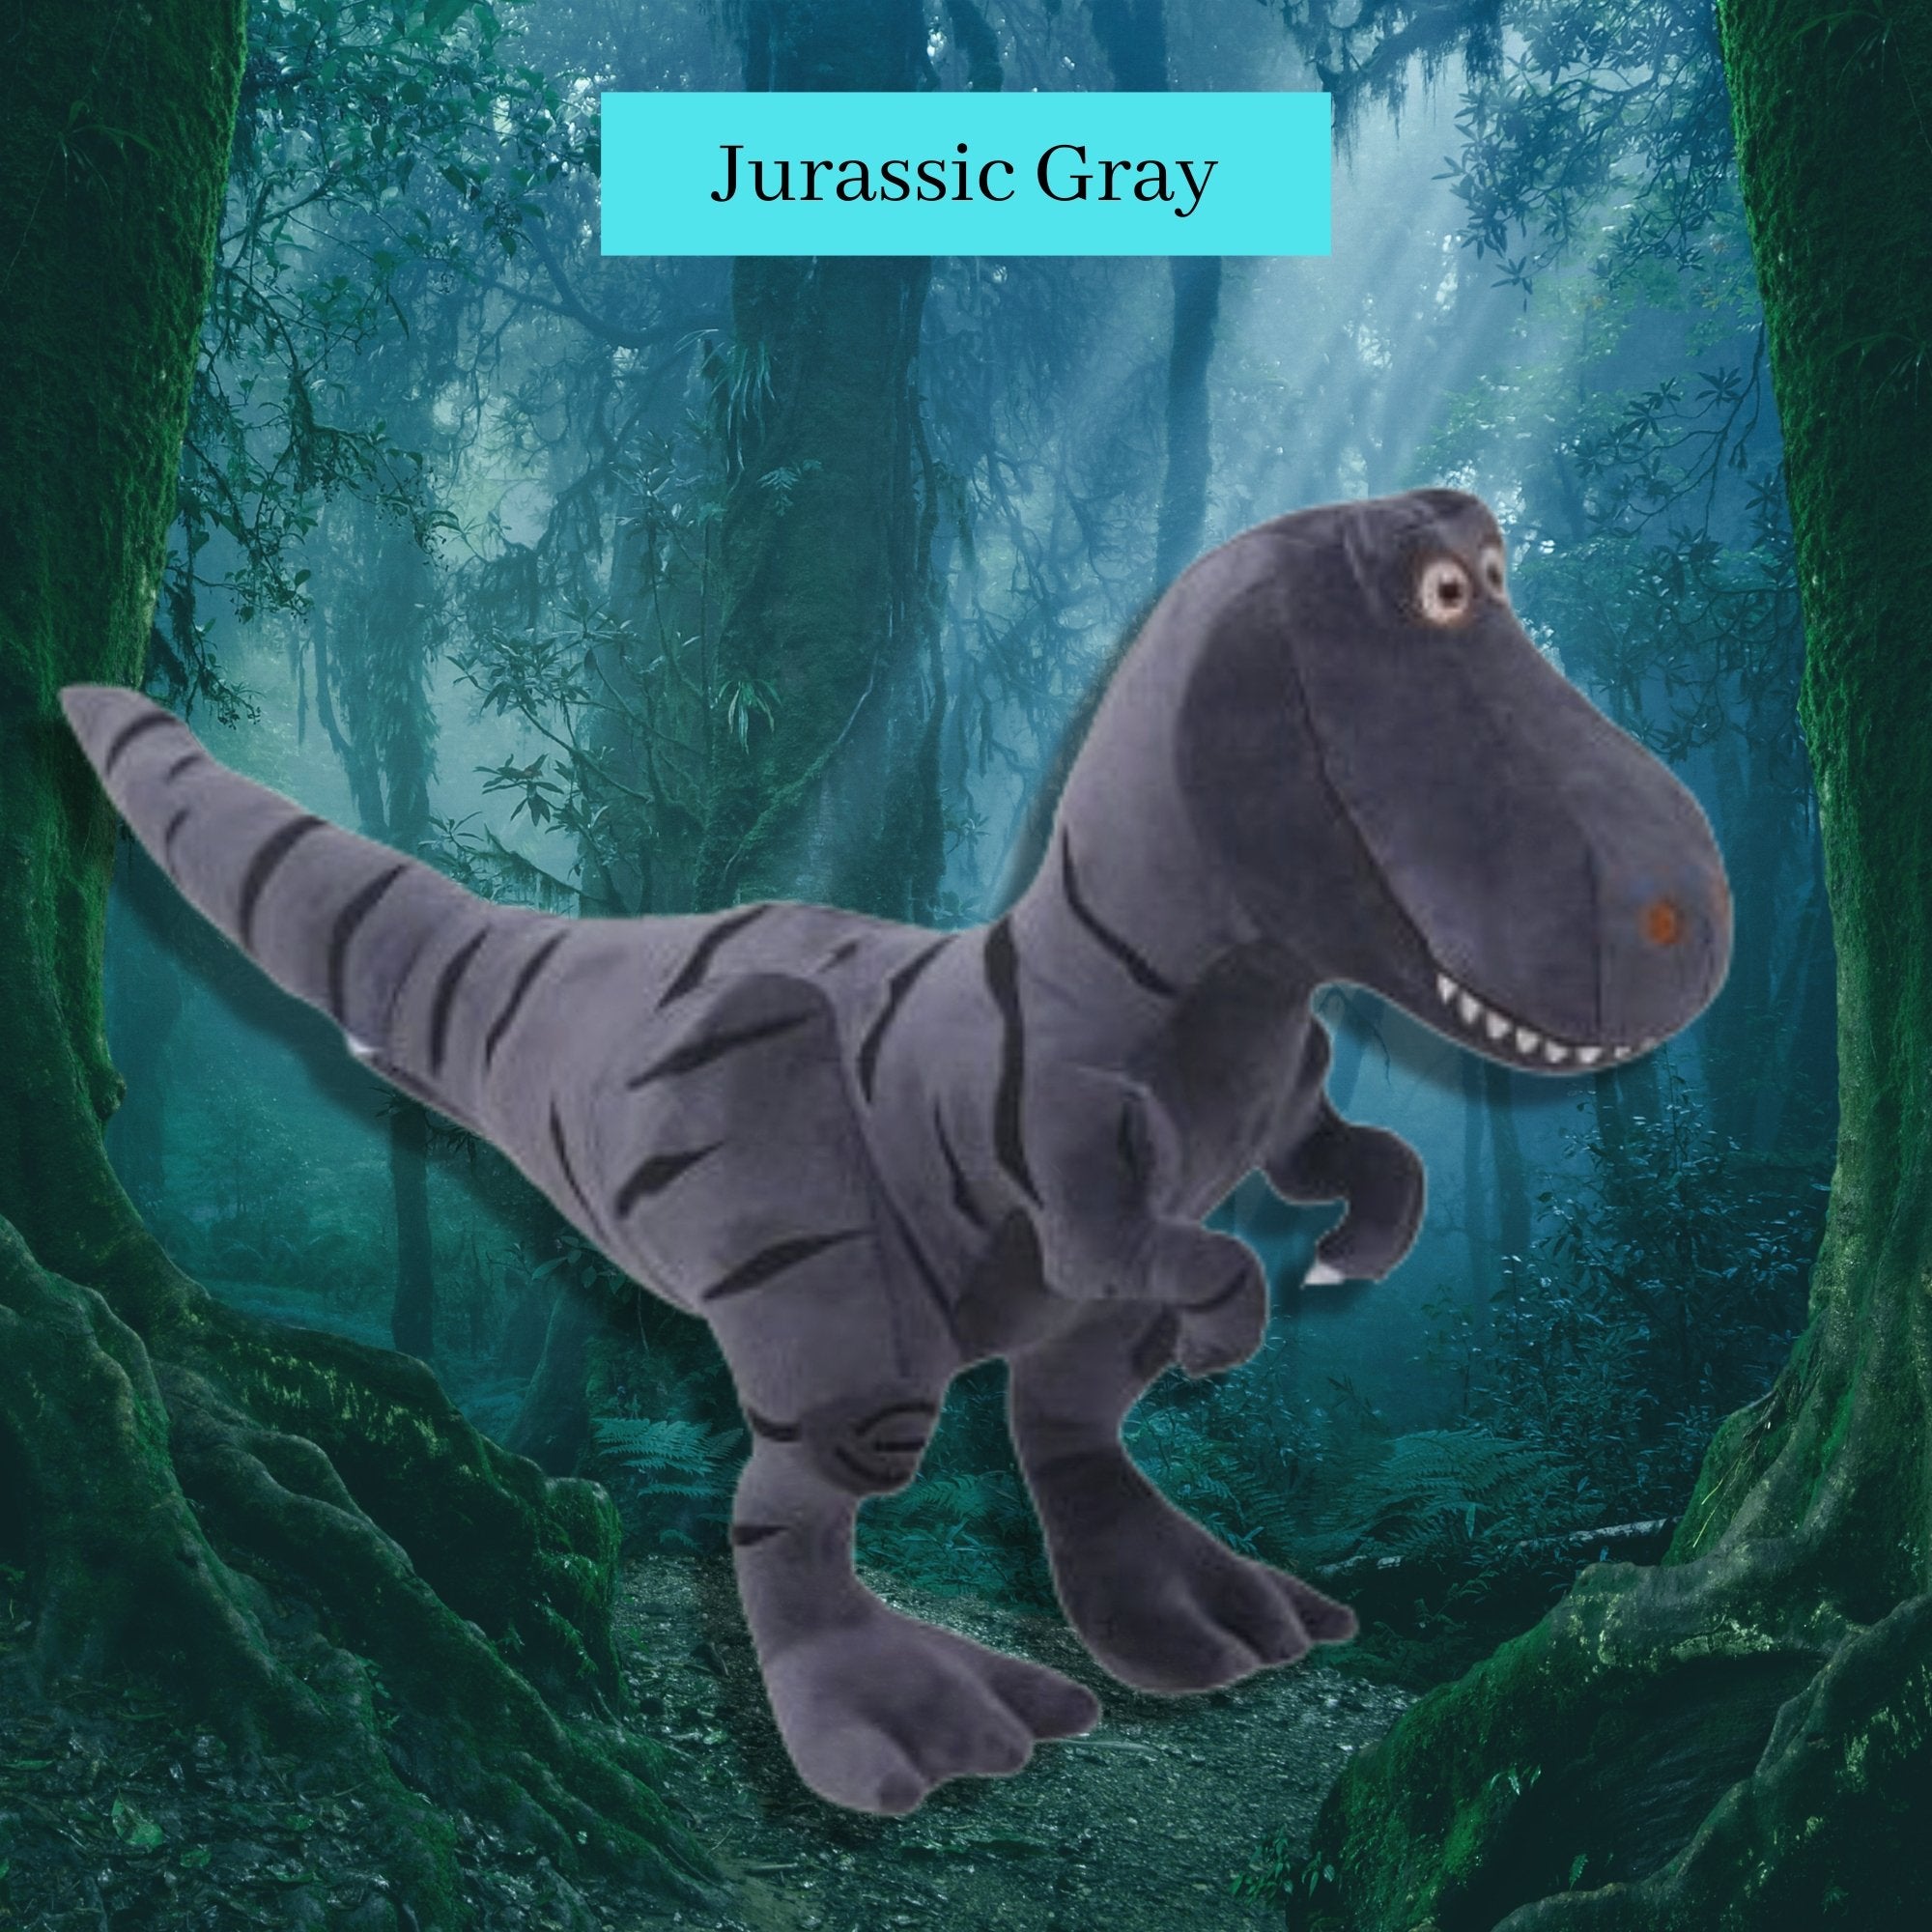 My BIG Dinosaur Plush Toy in jurassic gray